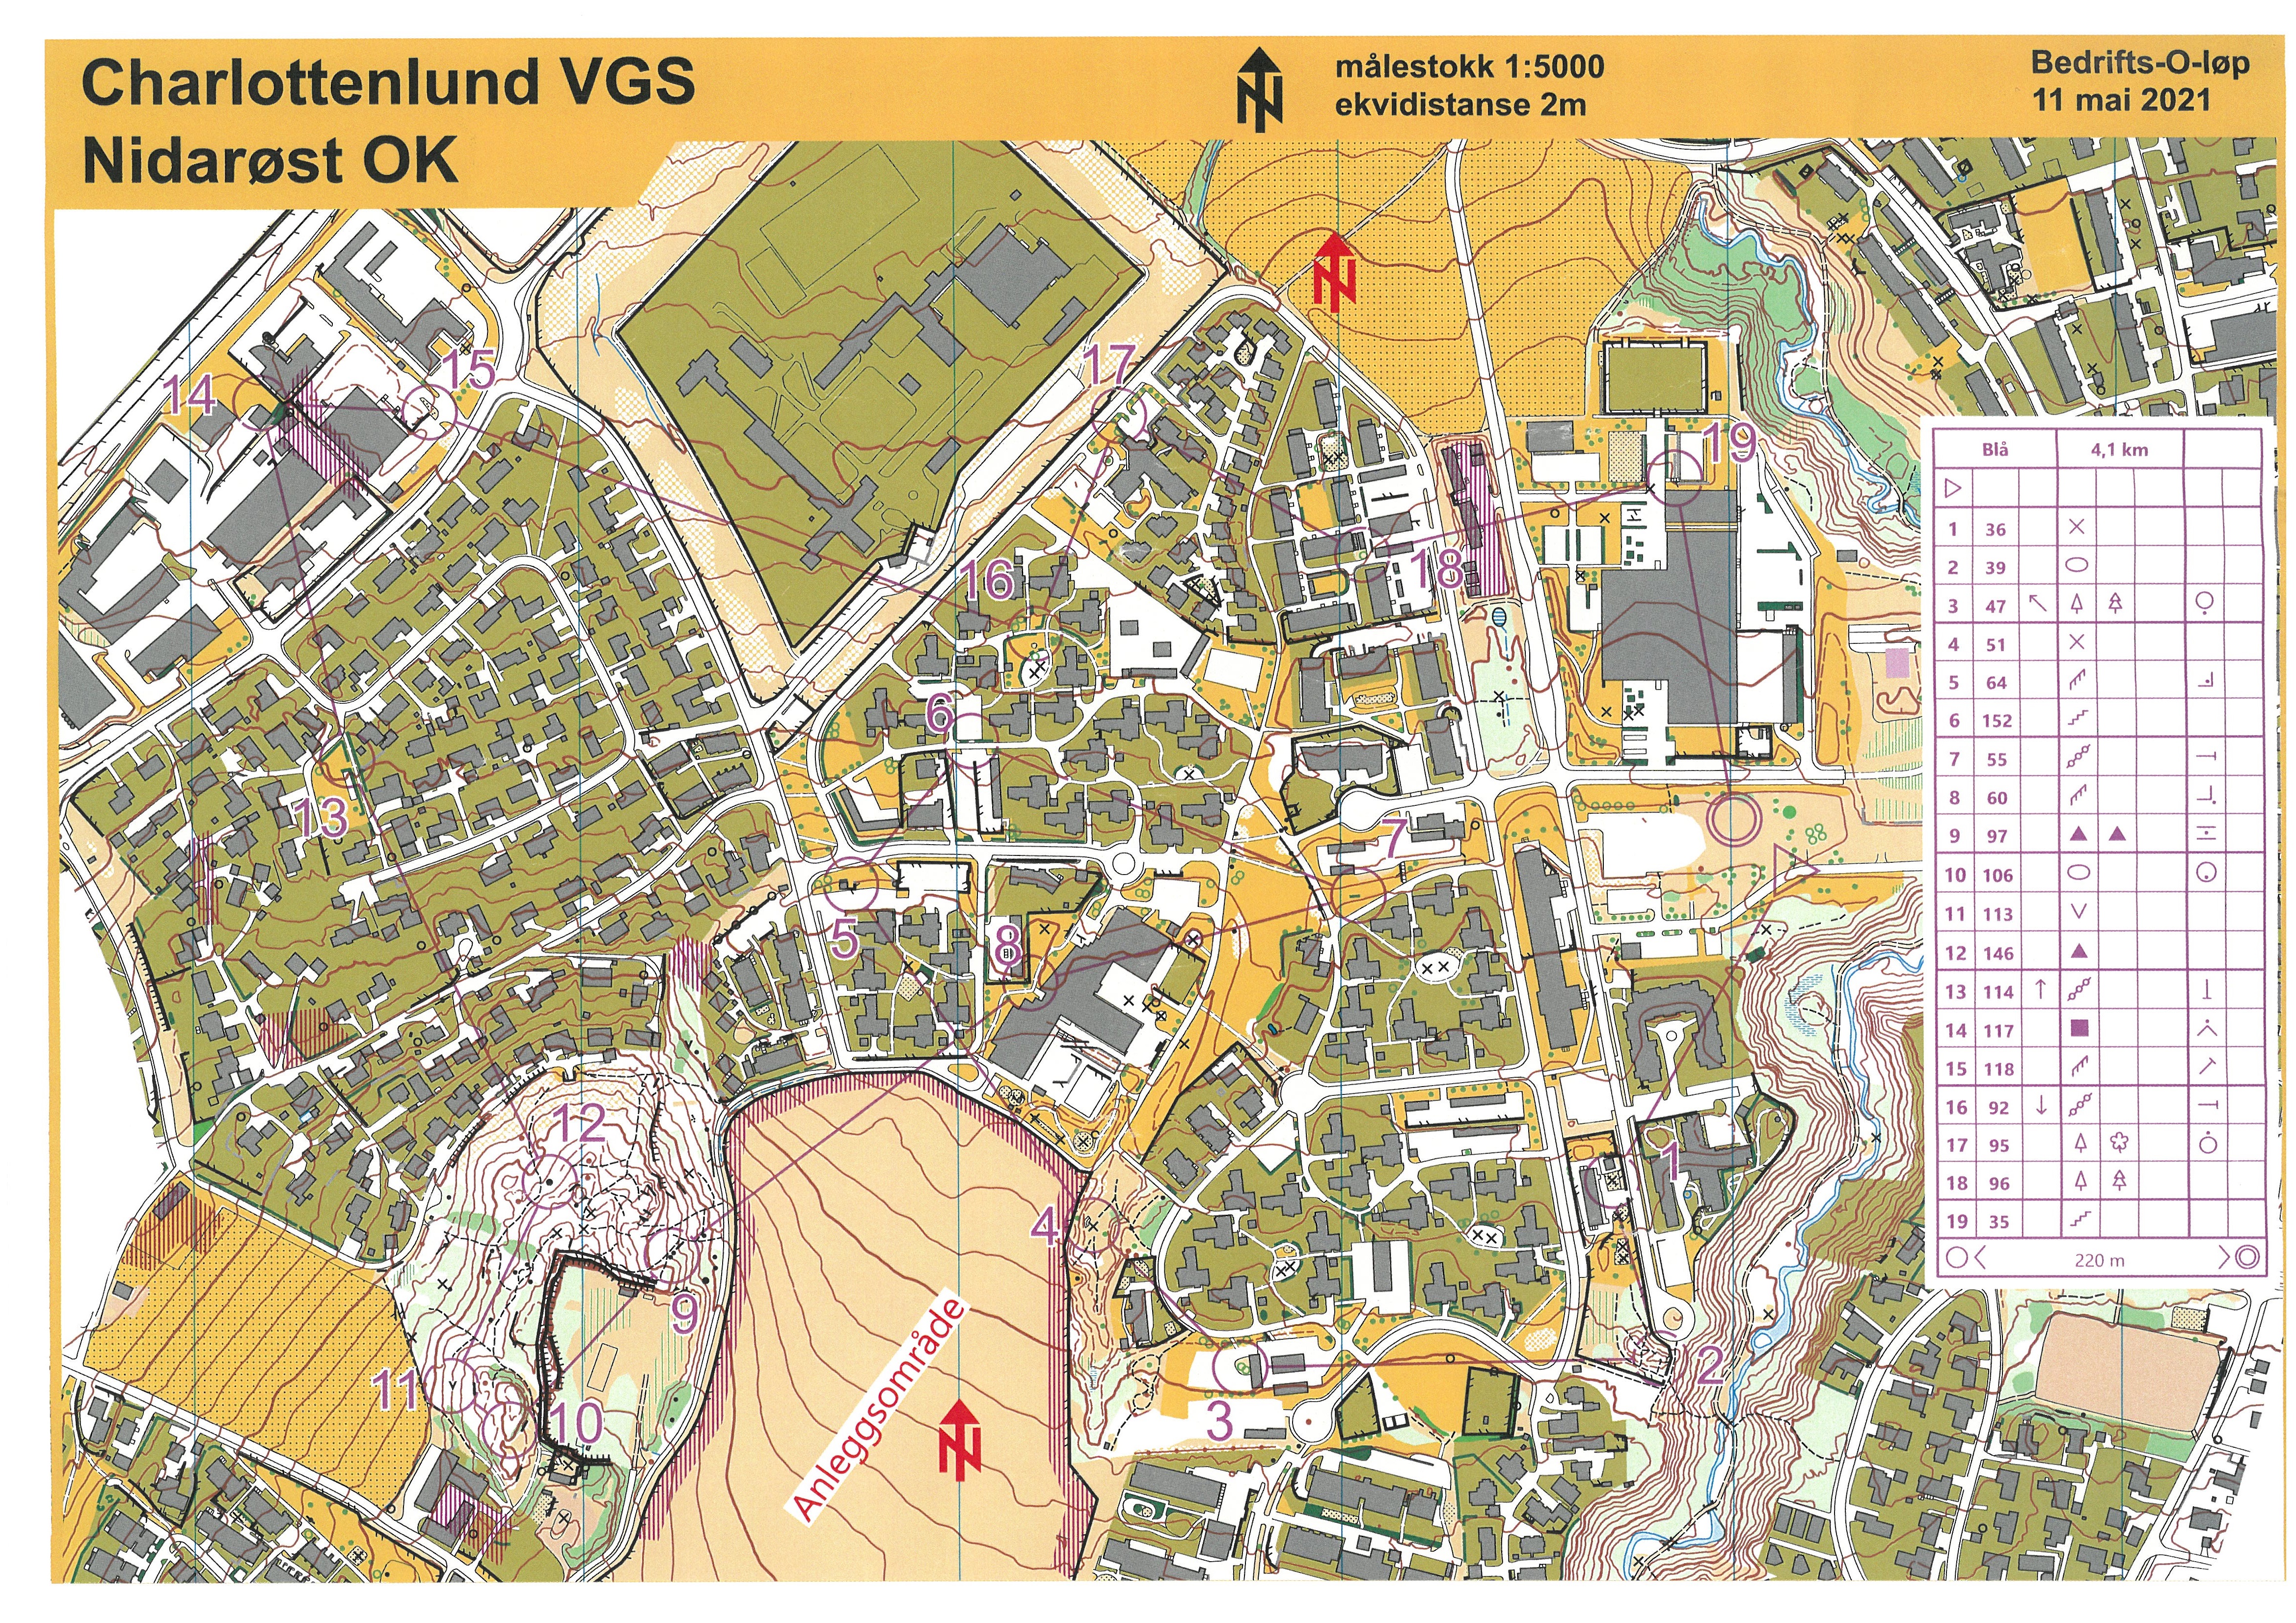 Bedrifts o-løp 1 - Charlottenlund (11.05.2021)